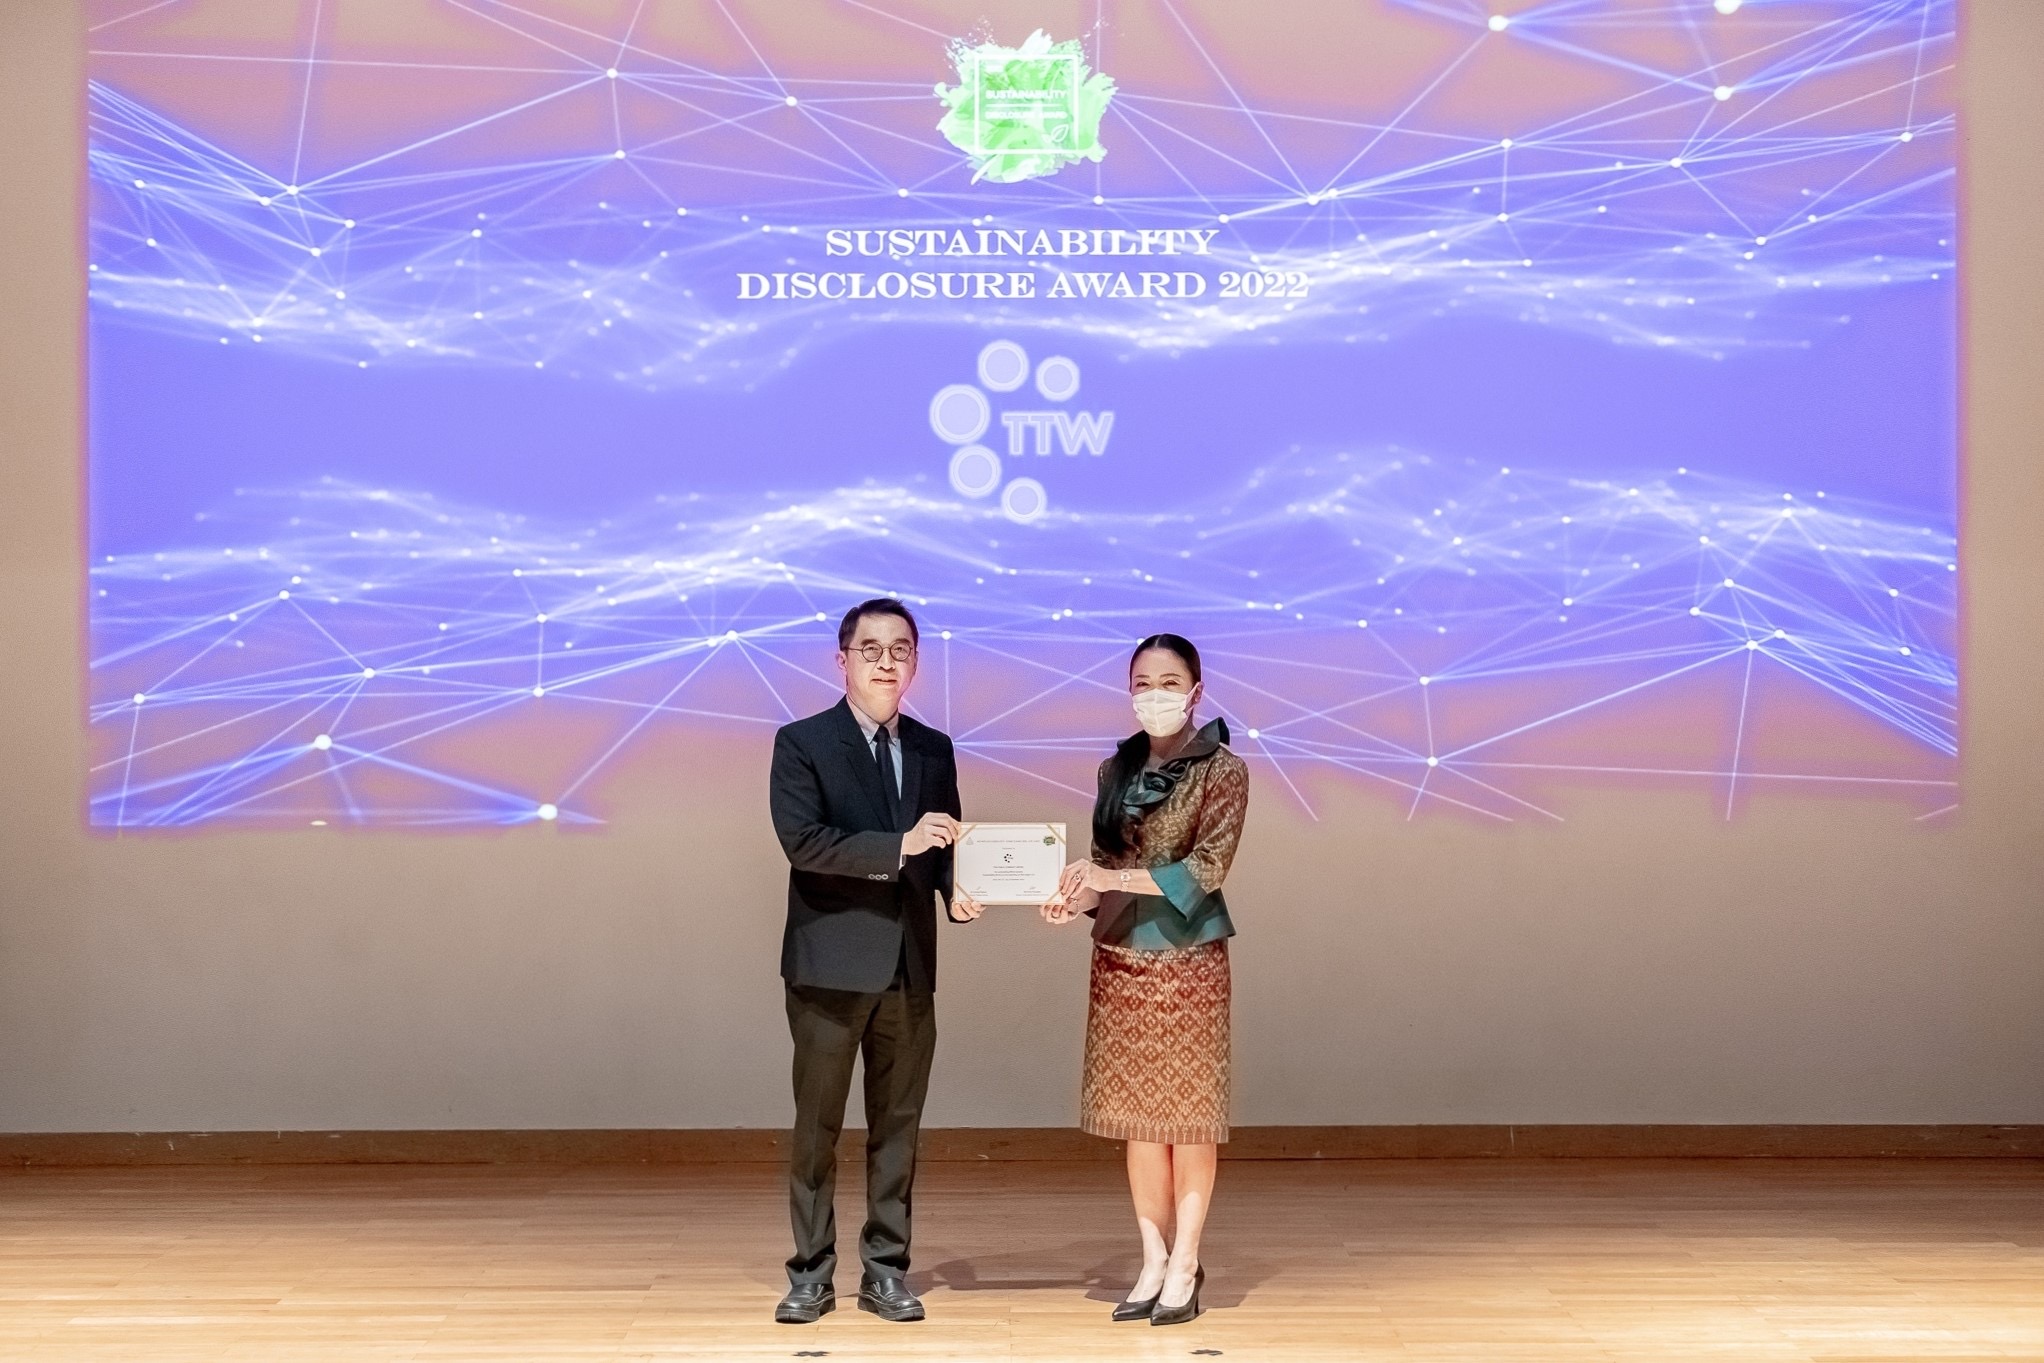 TTW รับรางวัลเกียรติคุณ “Sustainability Disclosure Award” ประจำปี 2565 ต่อเนื่องเป็นปีที่ 4 จากสถาบันไทยพัฒน์